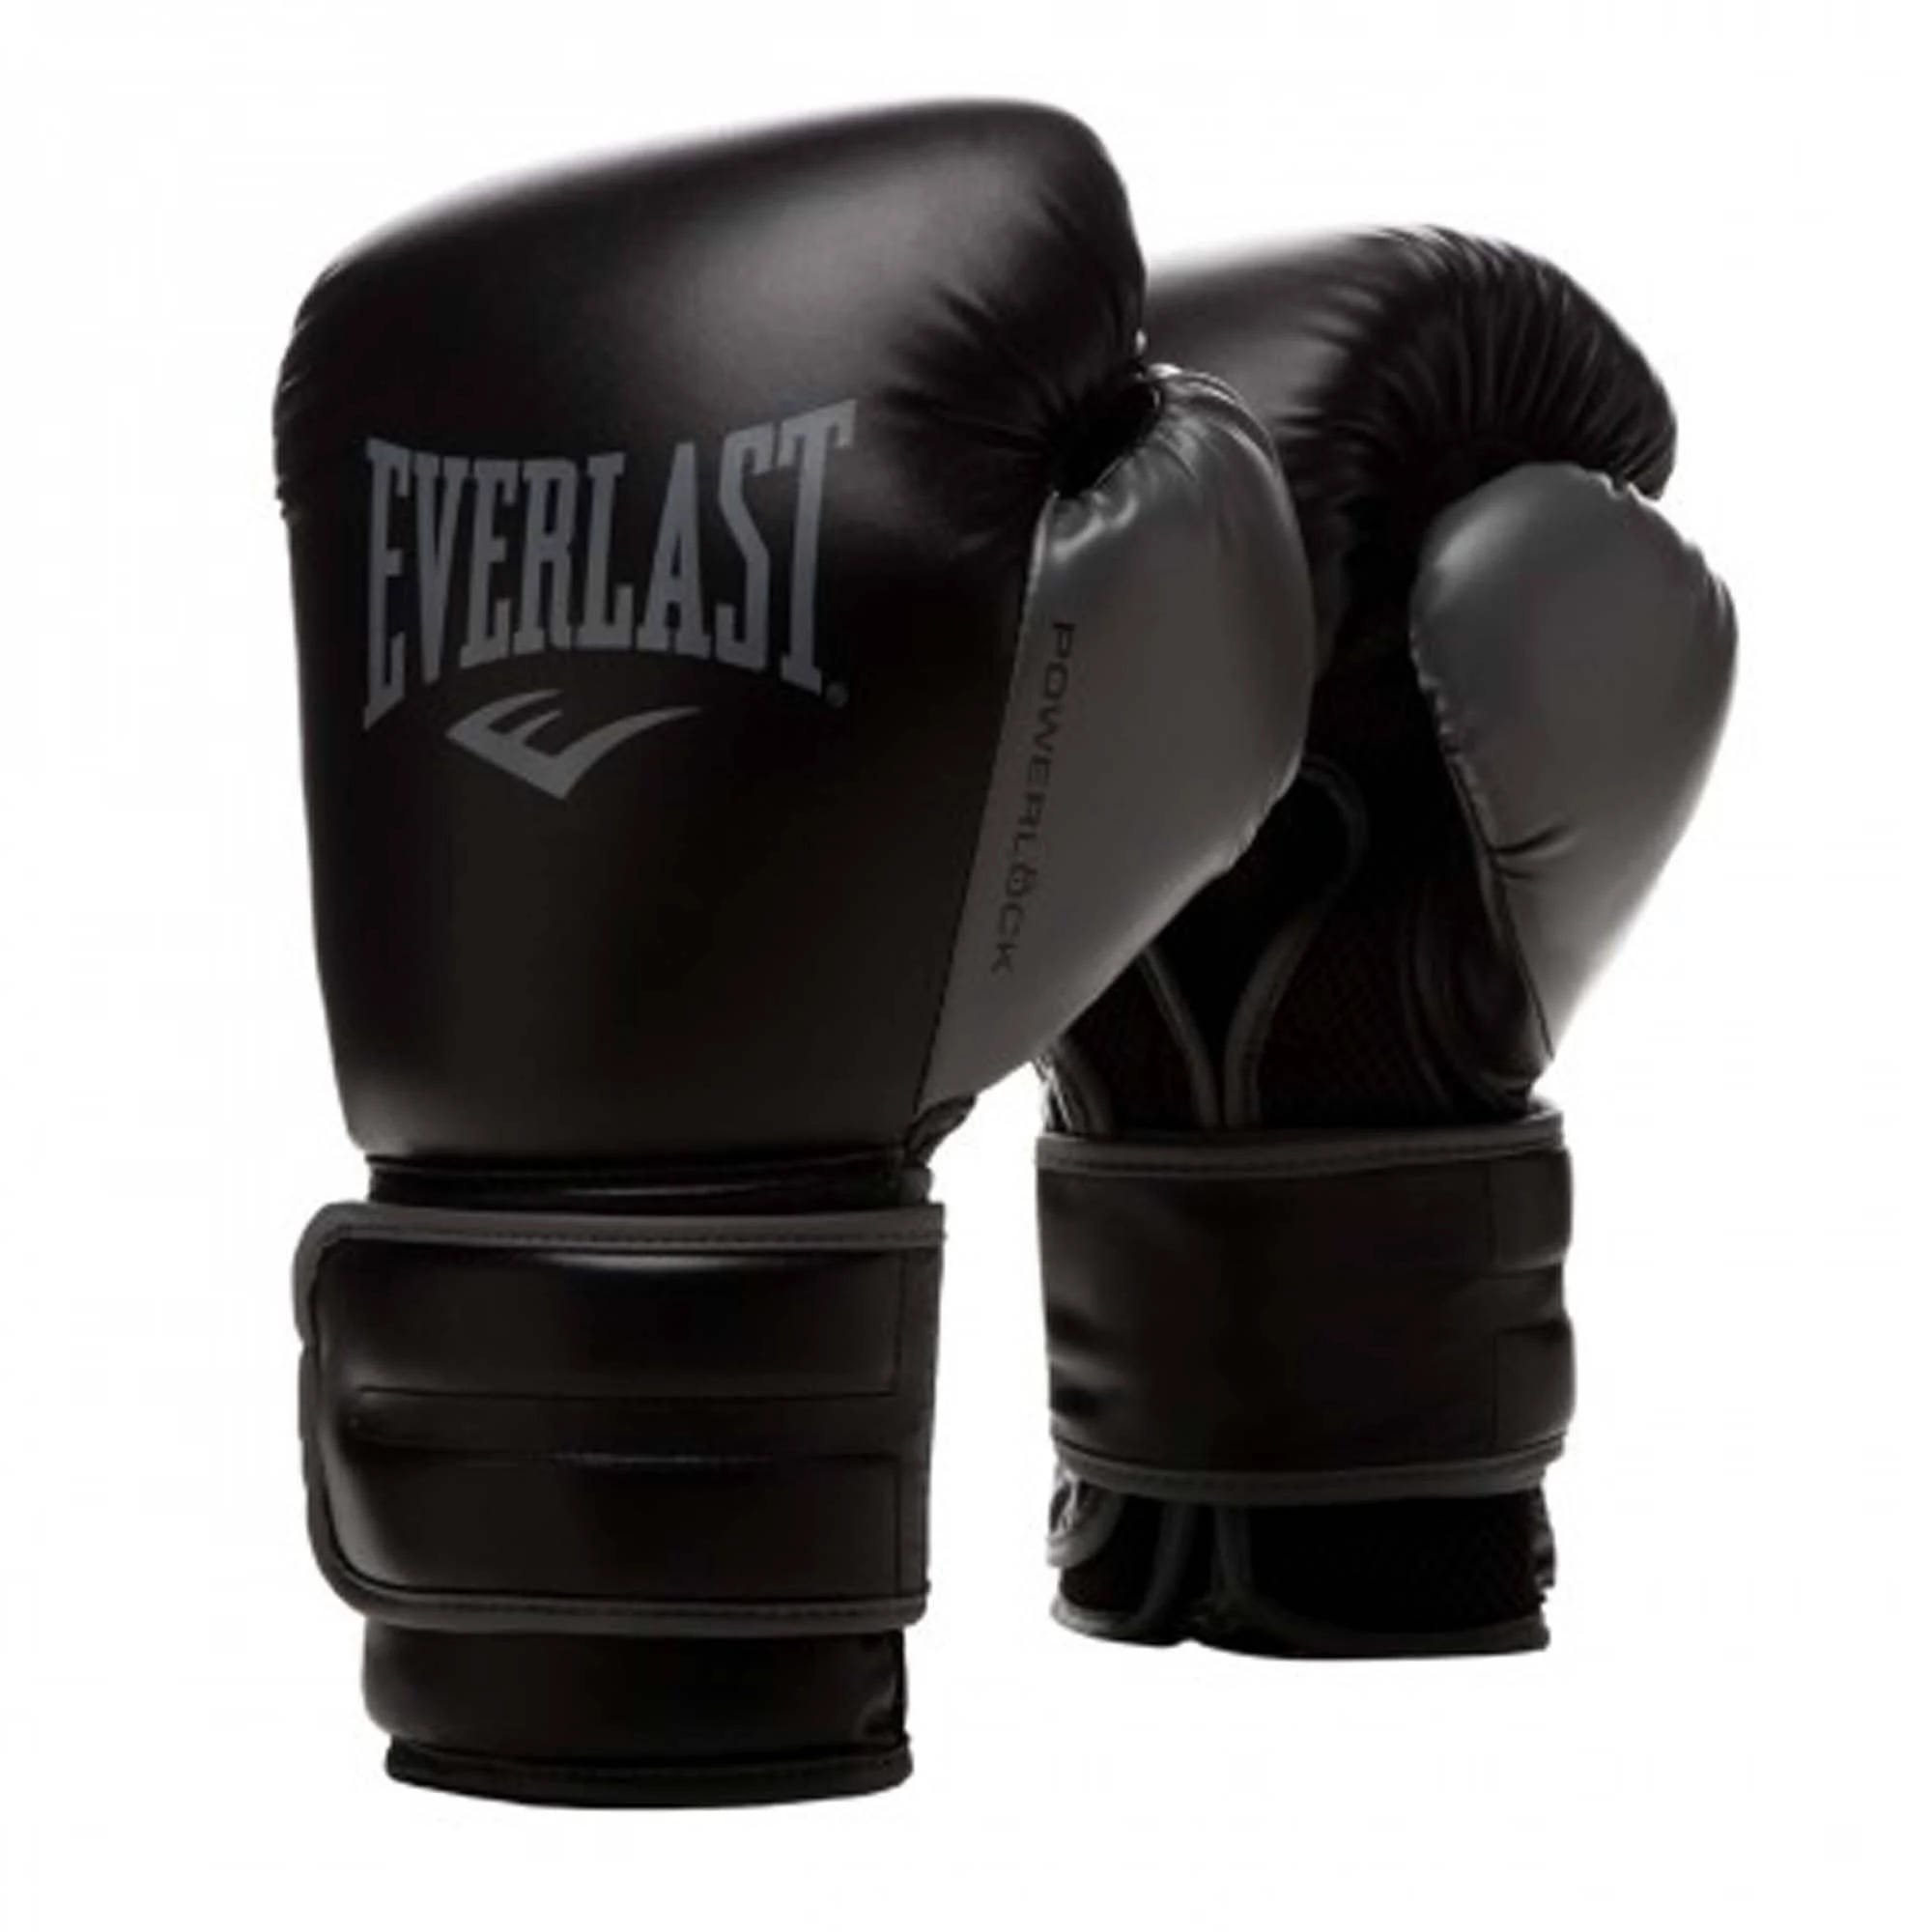 Everlast Powerlock 2 Training Gloves for Intense Boxing Sessions | Image